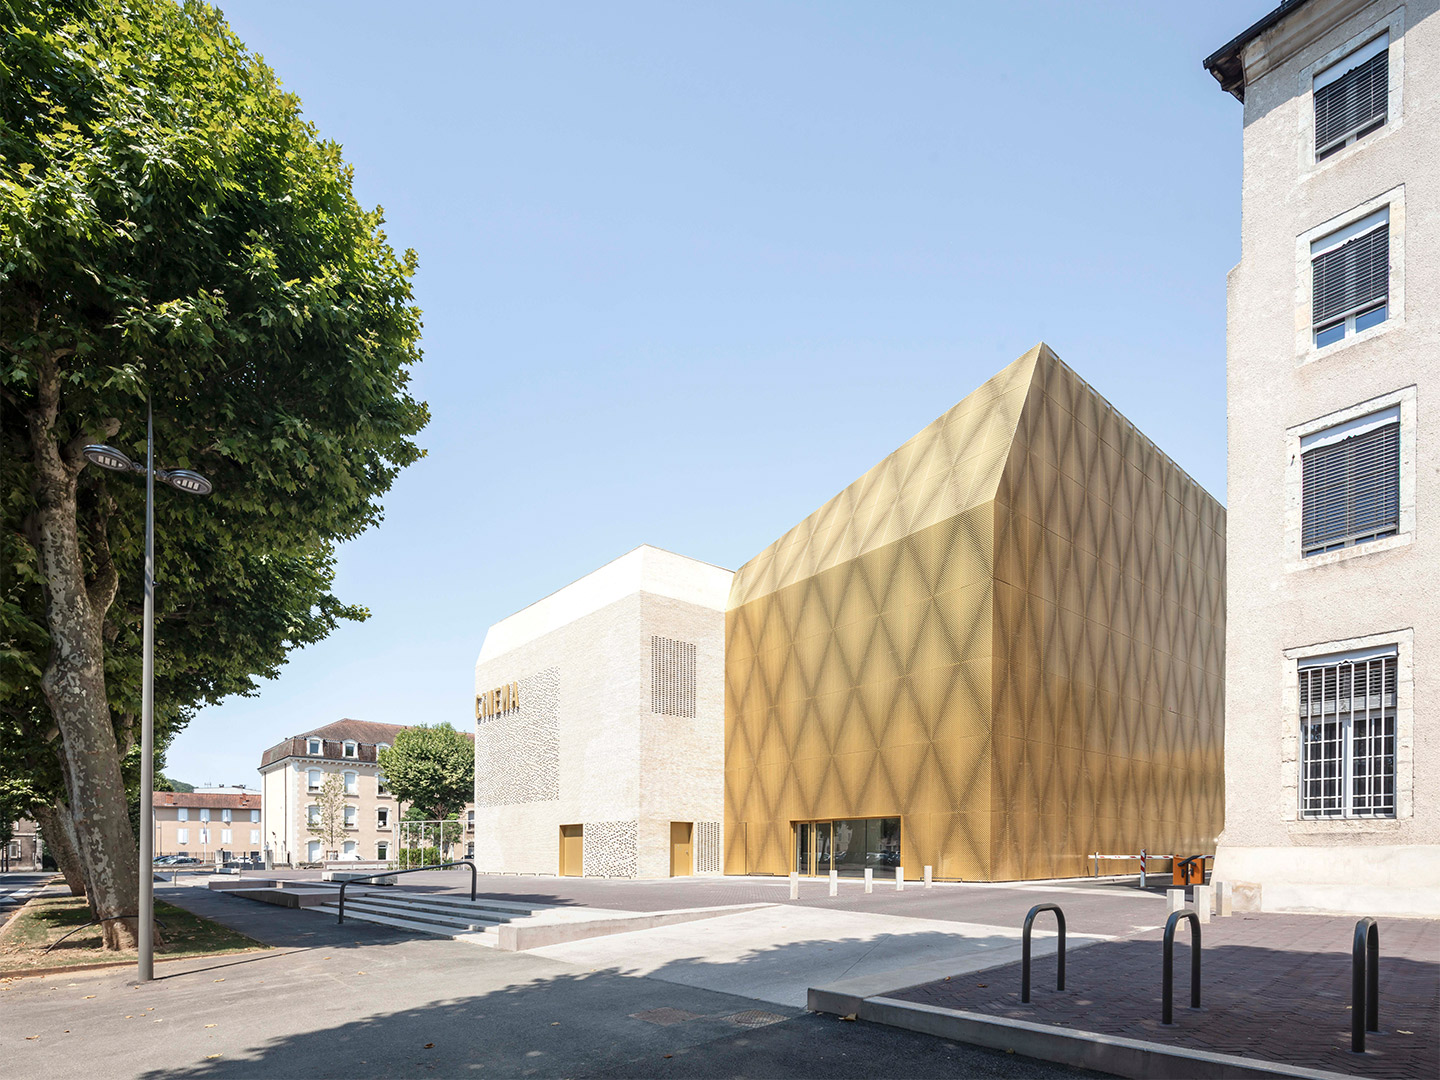 Cinéma Le Grand Palais in Cahors by Antonio Virga Architects (Cinema design))